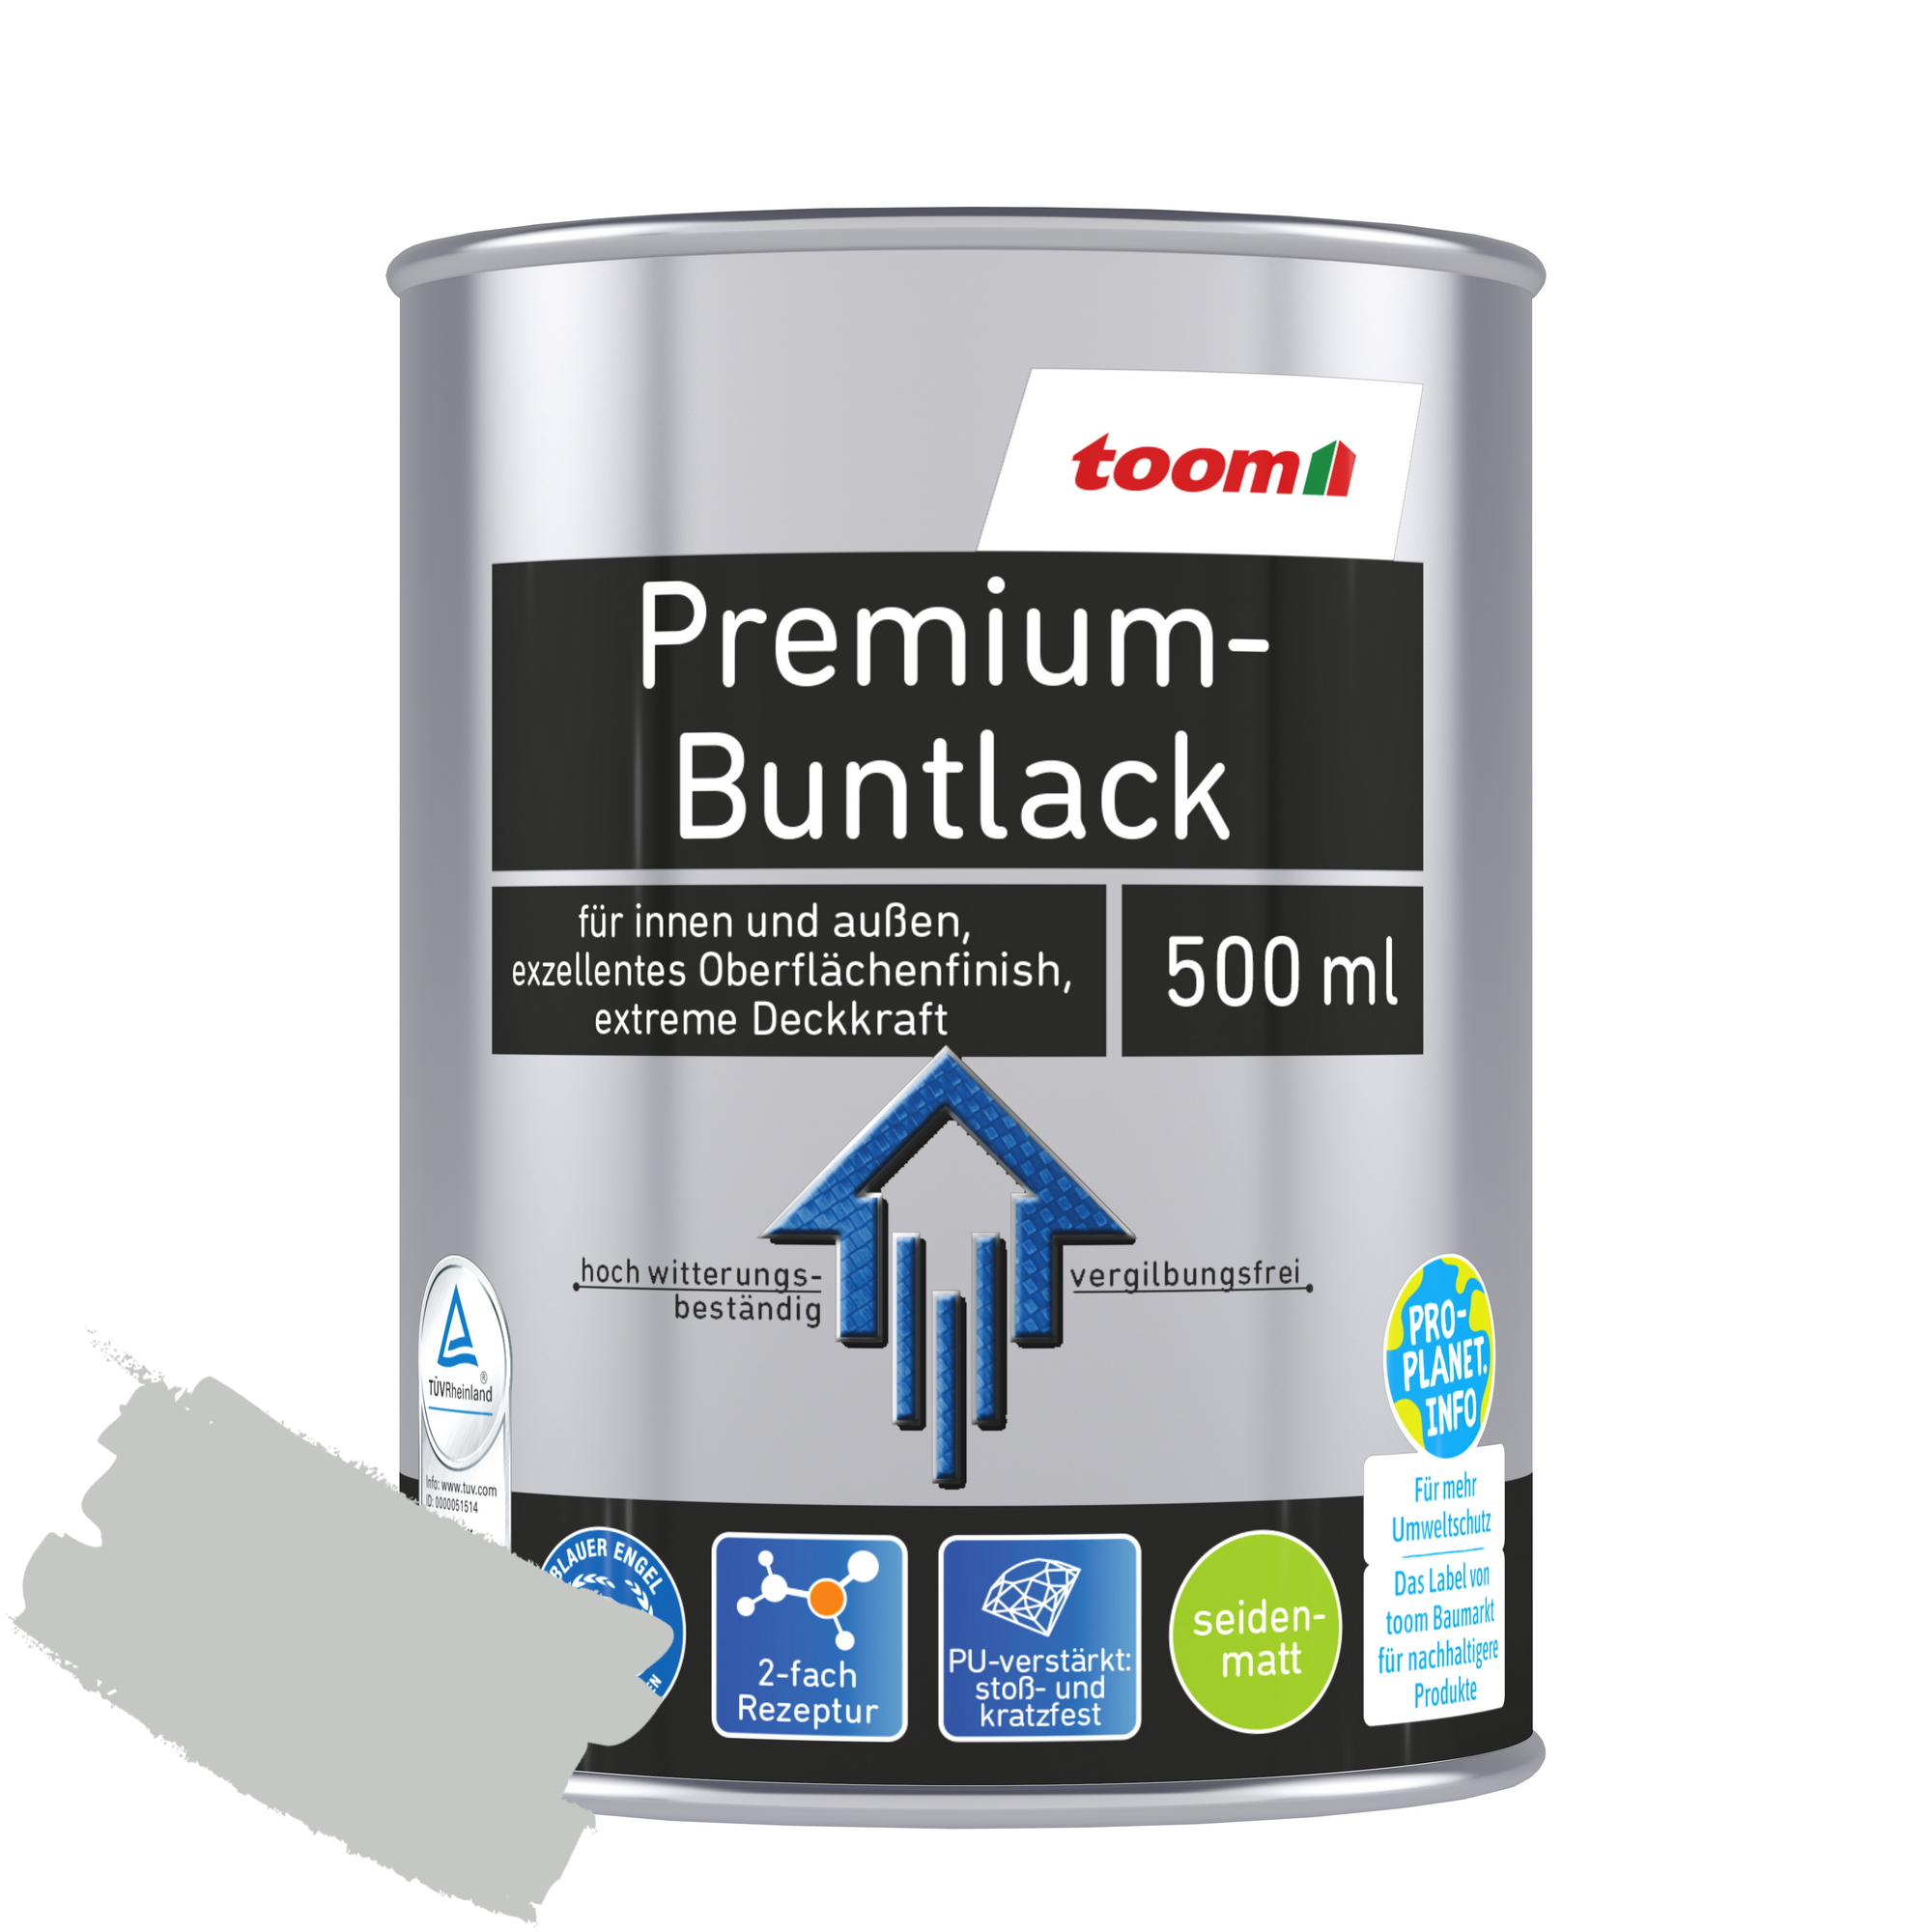 Premium-Buntlack lichtgrau seidenmatt 500 ml + product picture